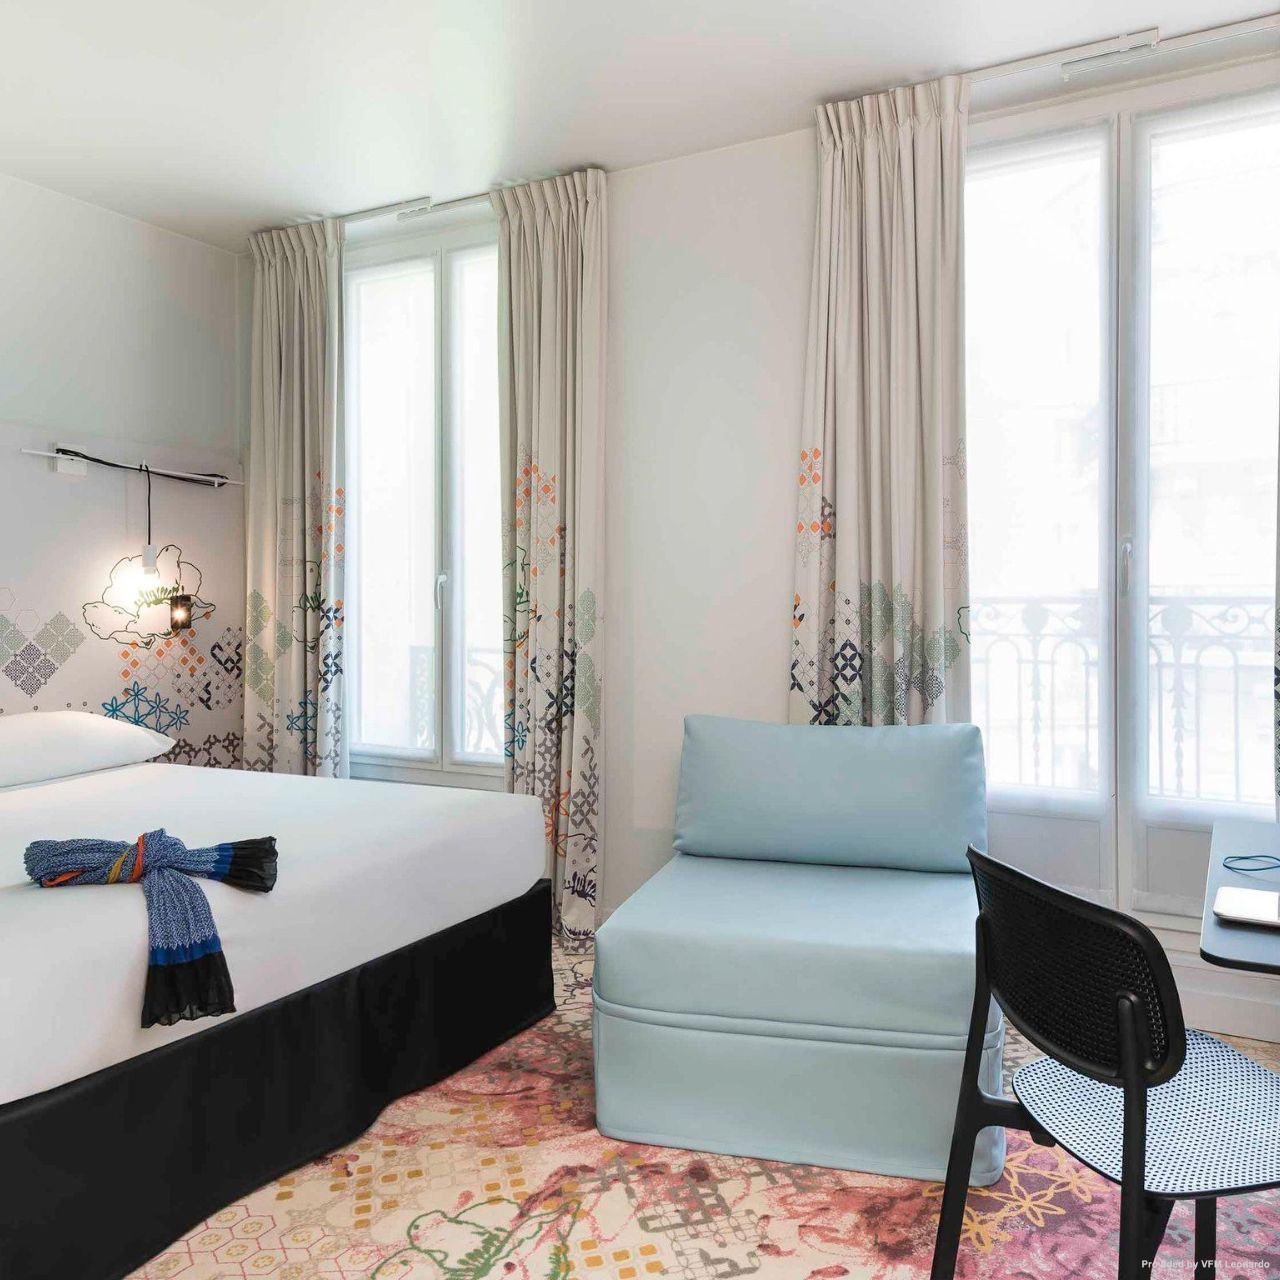 Hotel ibis Styles Paris Gare Saint-Lazare - Great prices at HOTEL INFO